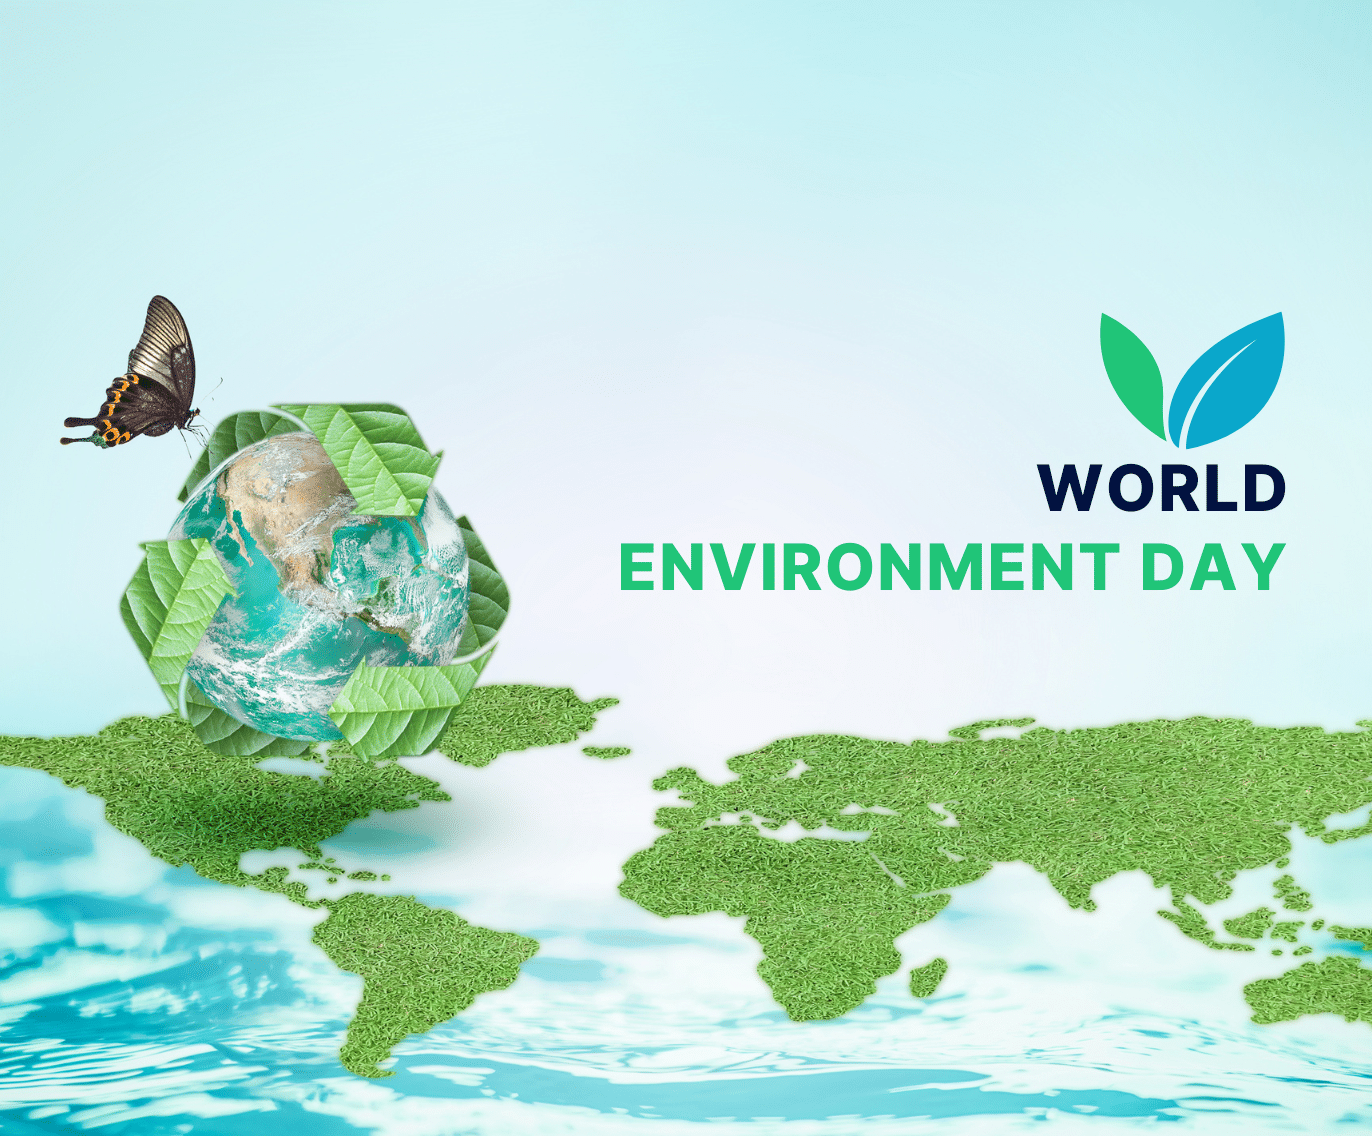 LG Sonic celebrates World Environment Day